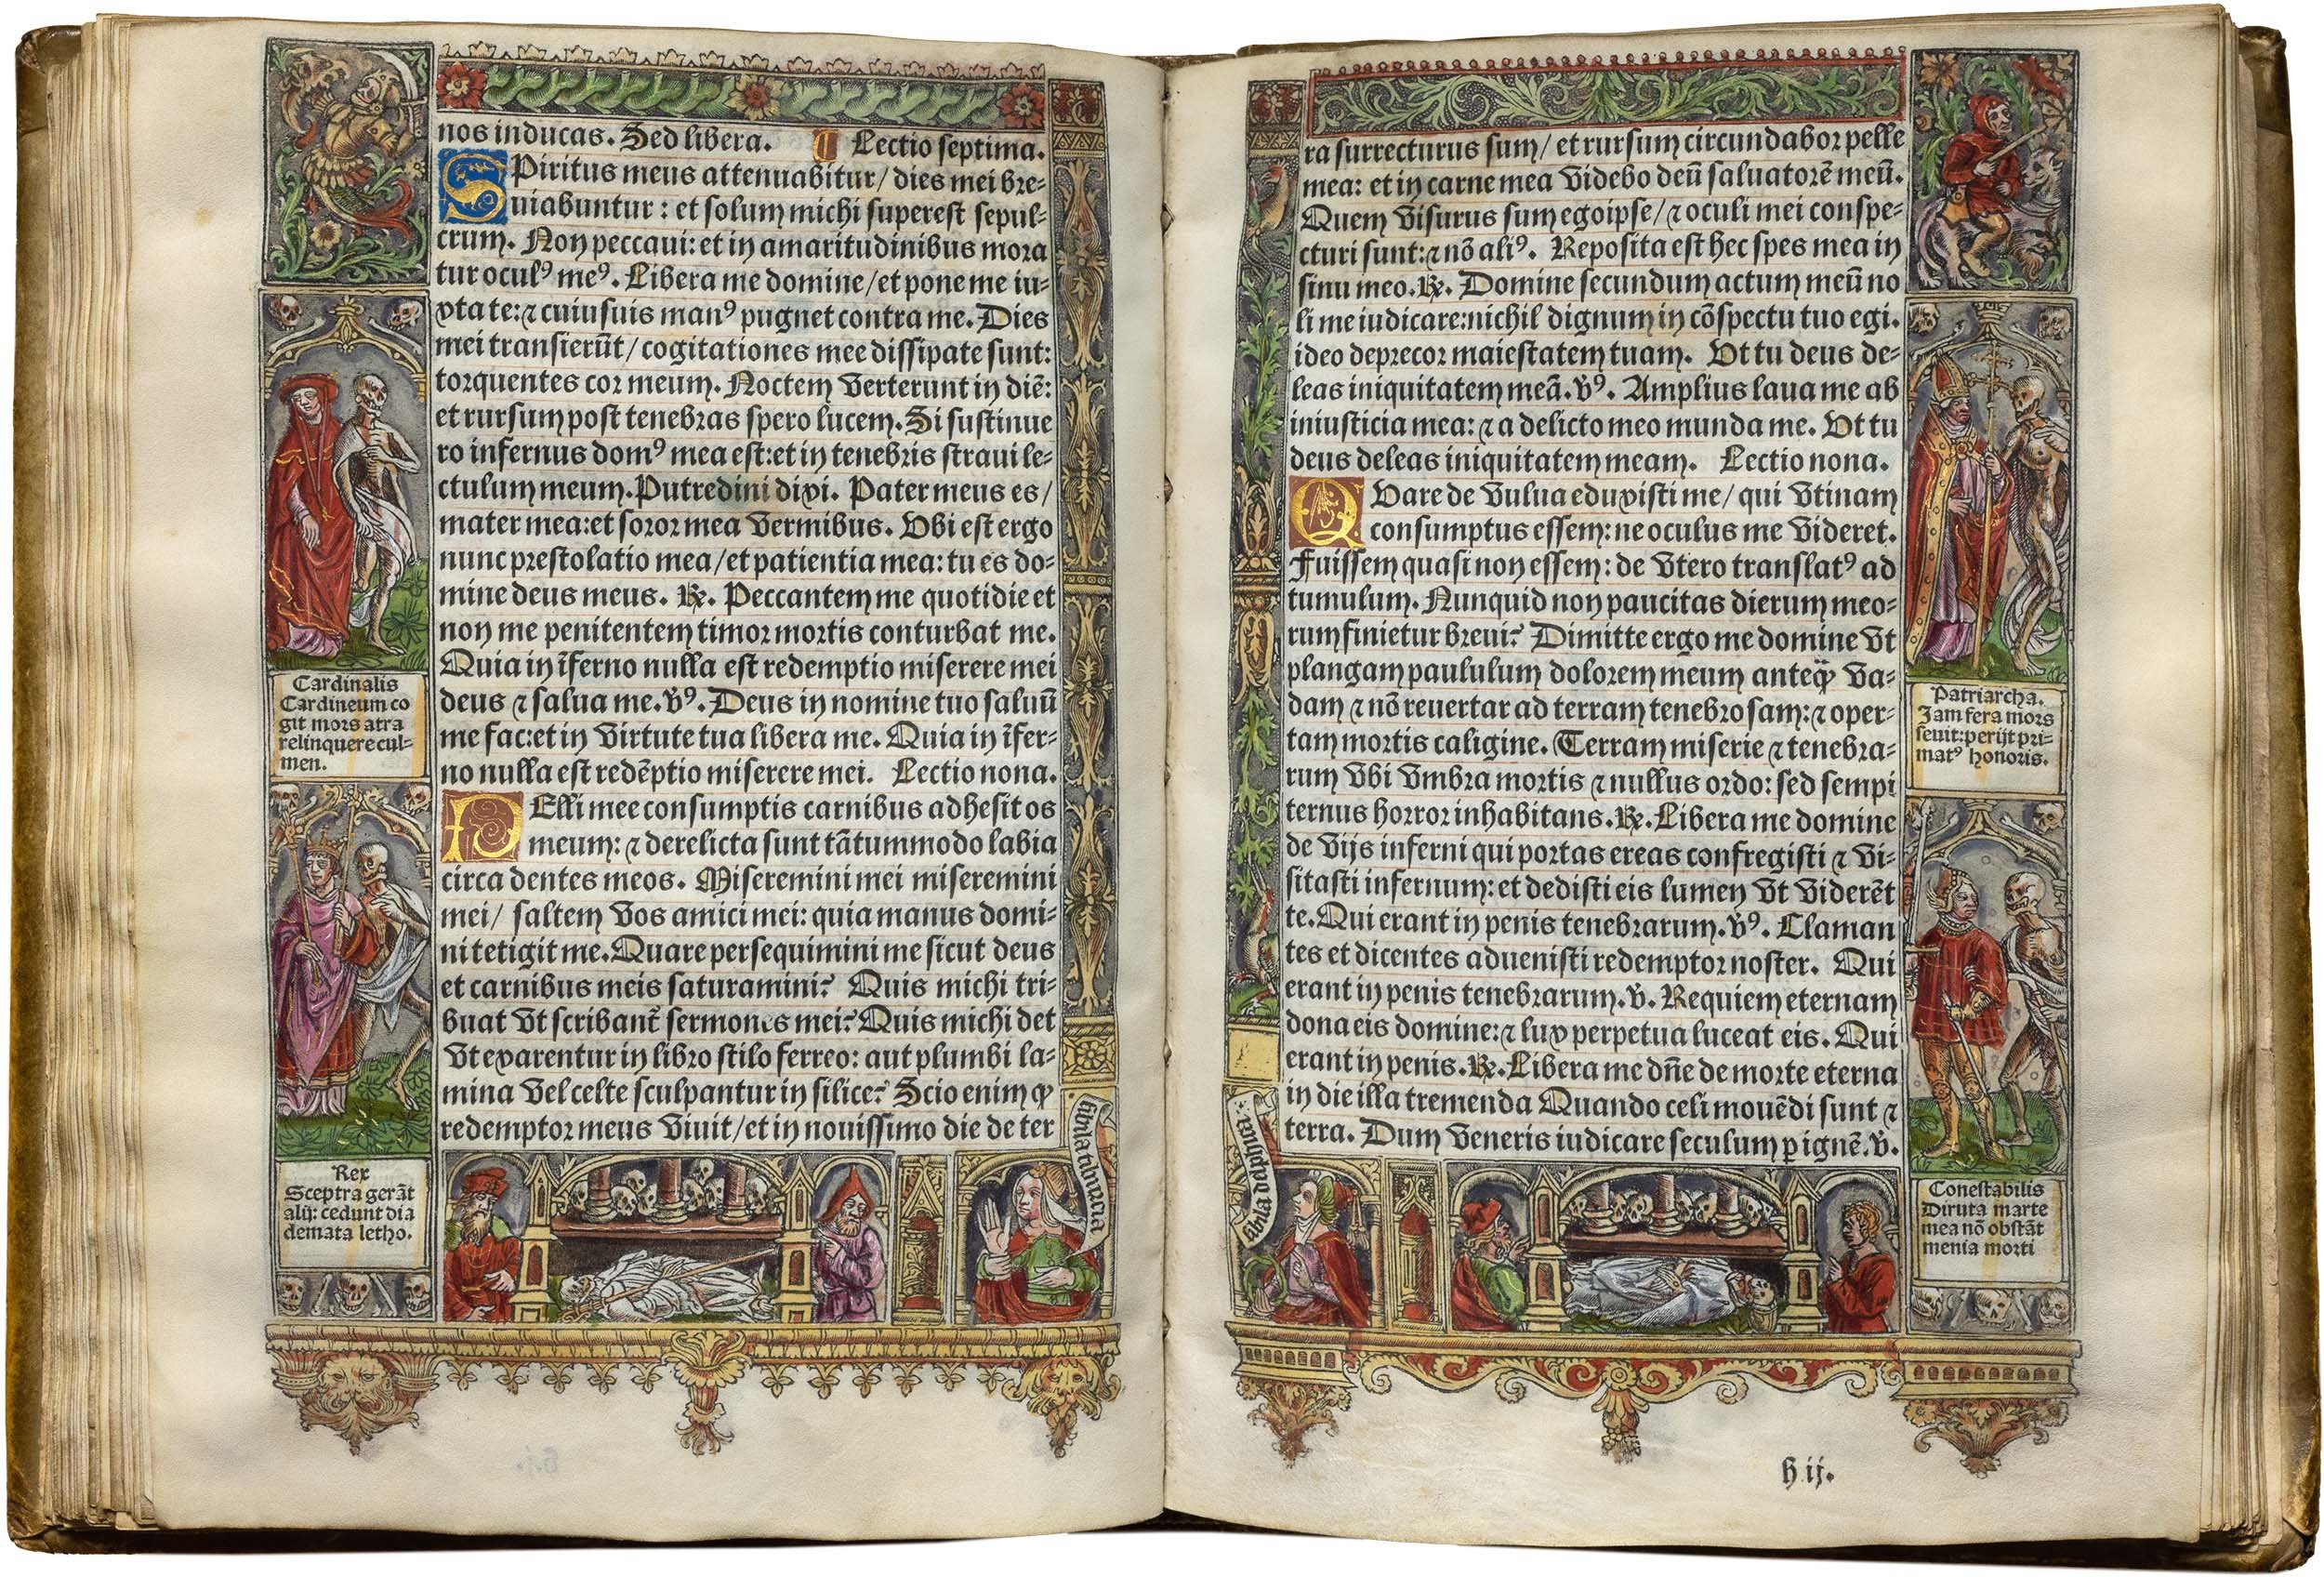 Horae-bmv-31-march-1511-kerver-printed-book-of-hours-illuminated-copy-vellum-61.jpg